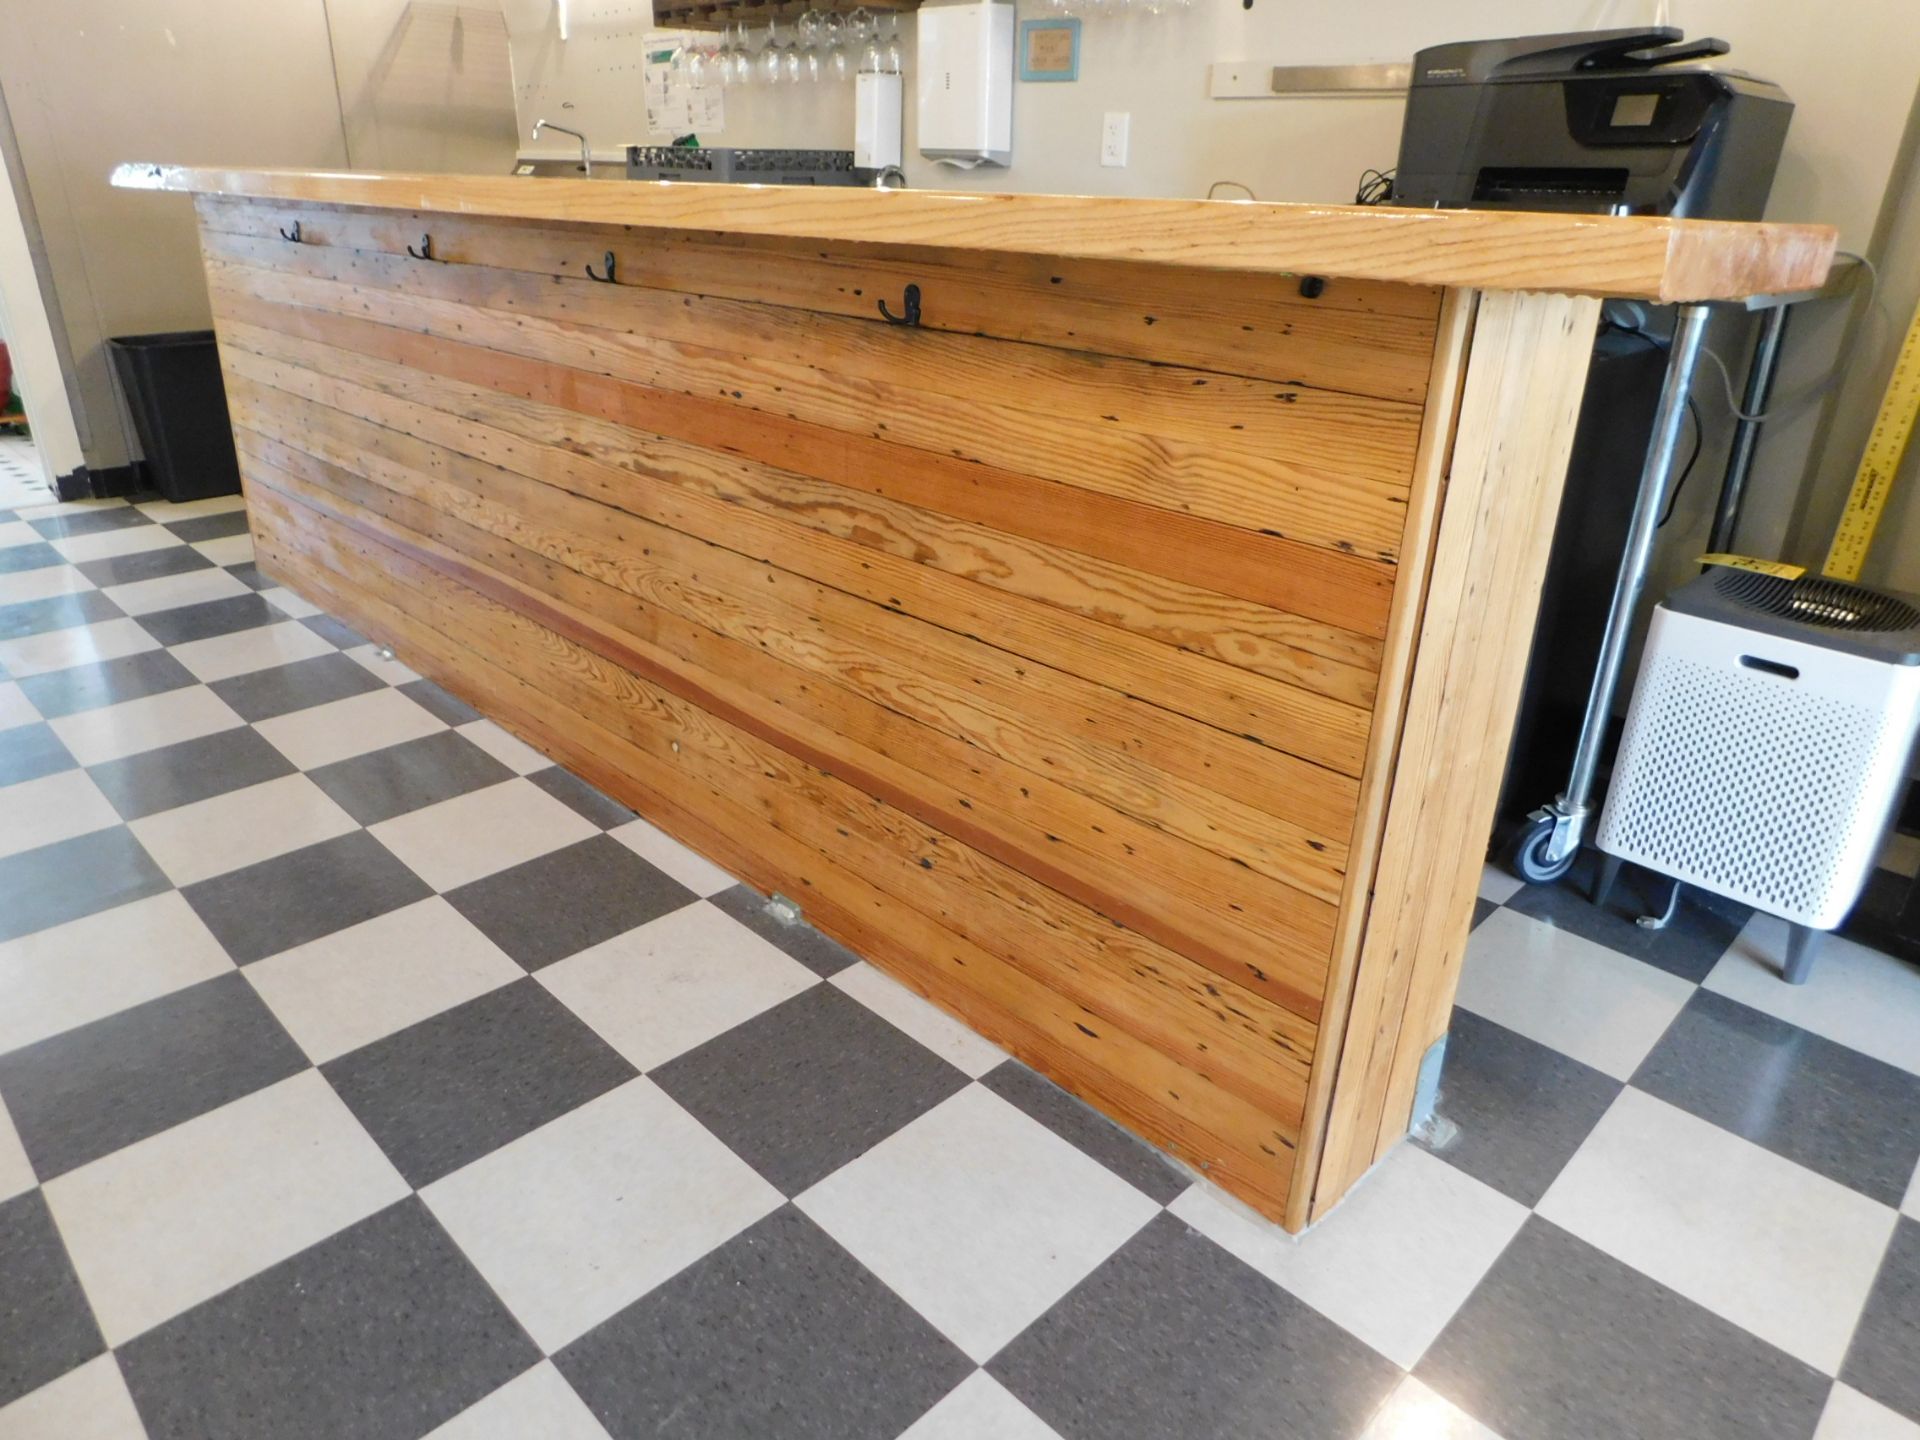 12' Wood Finish Bar, Mill Cut Hardwood Slab, Epoxy Counter Top, Wood Plank Sides, 12' L x 17" W x - Image 4 of 7